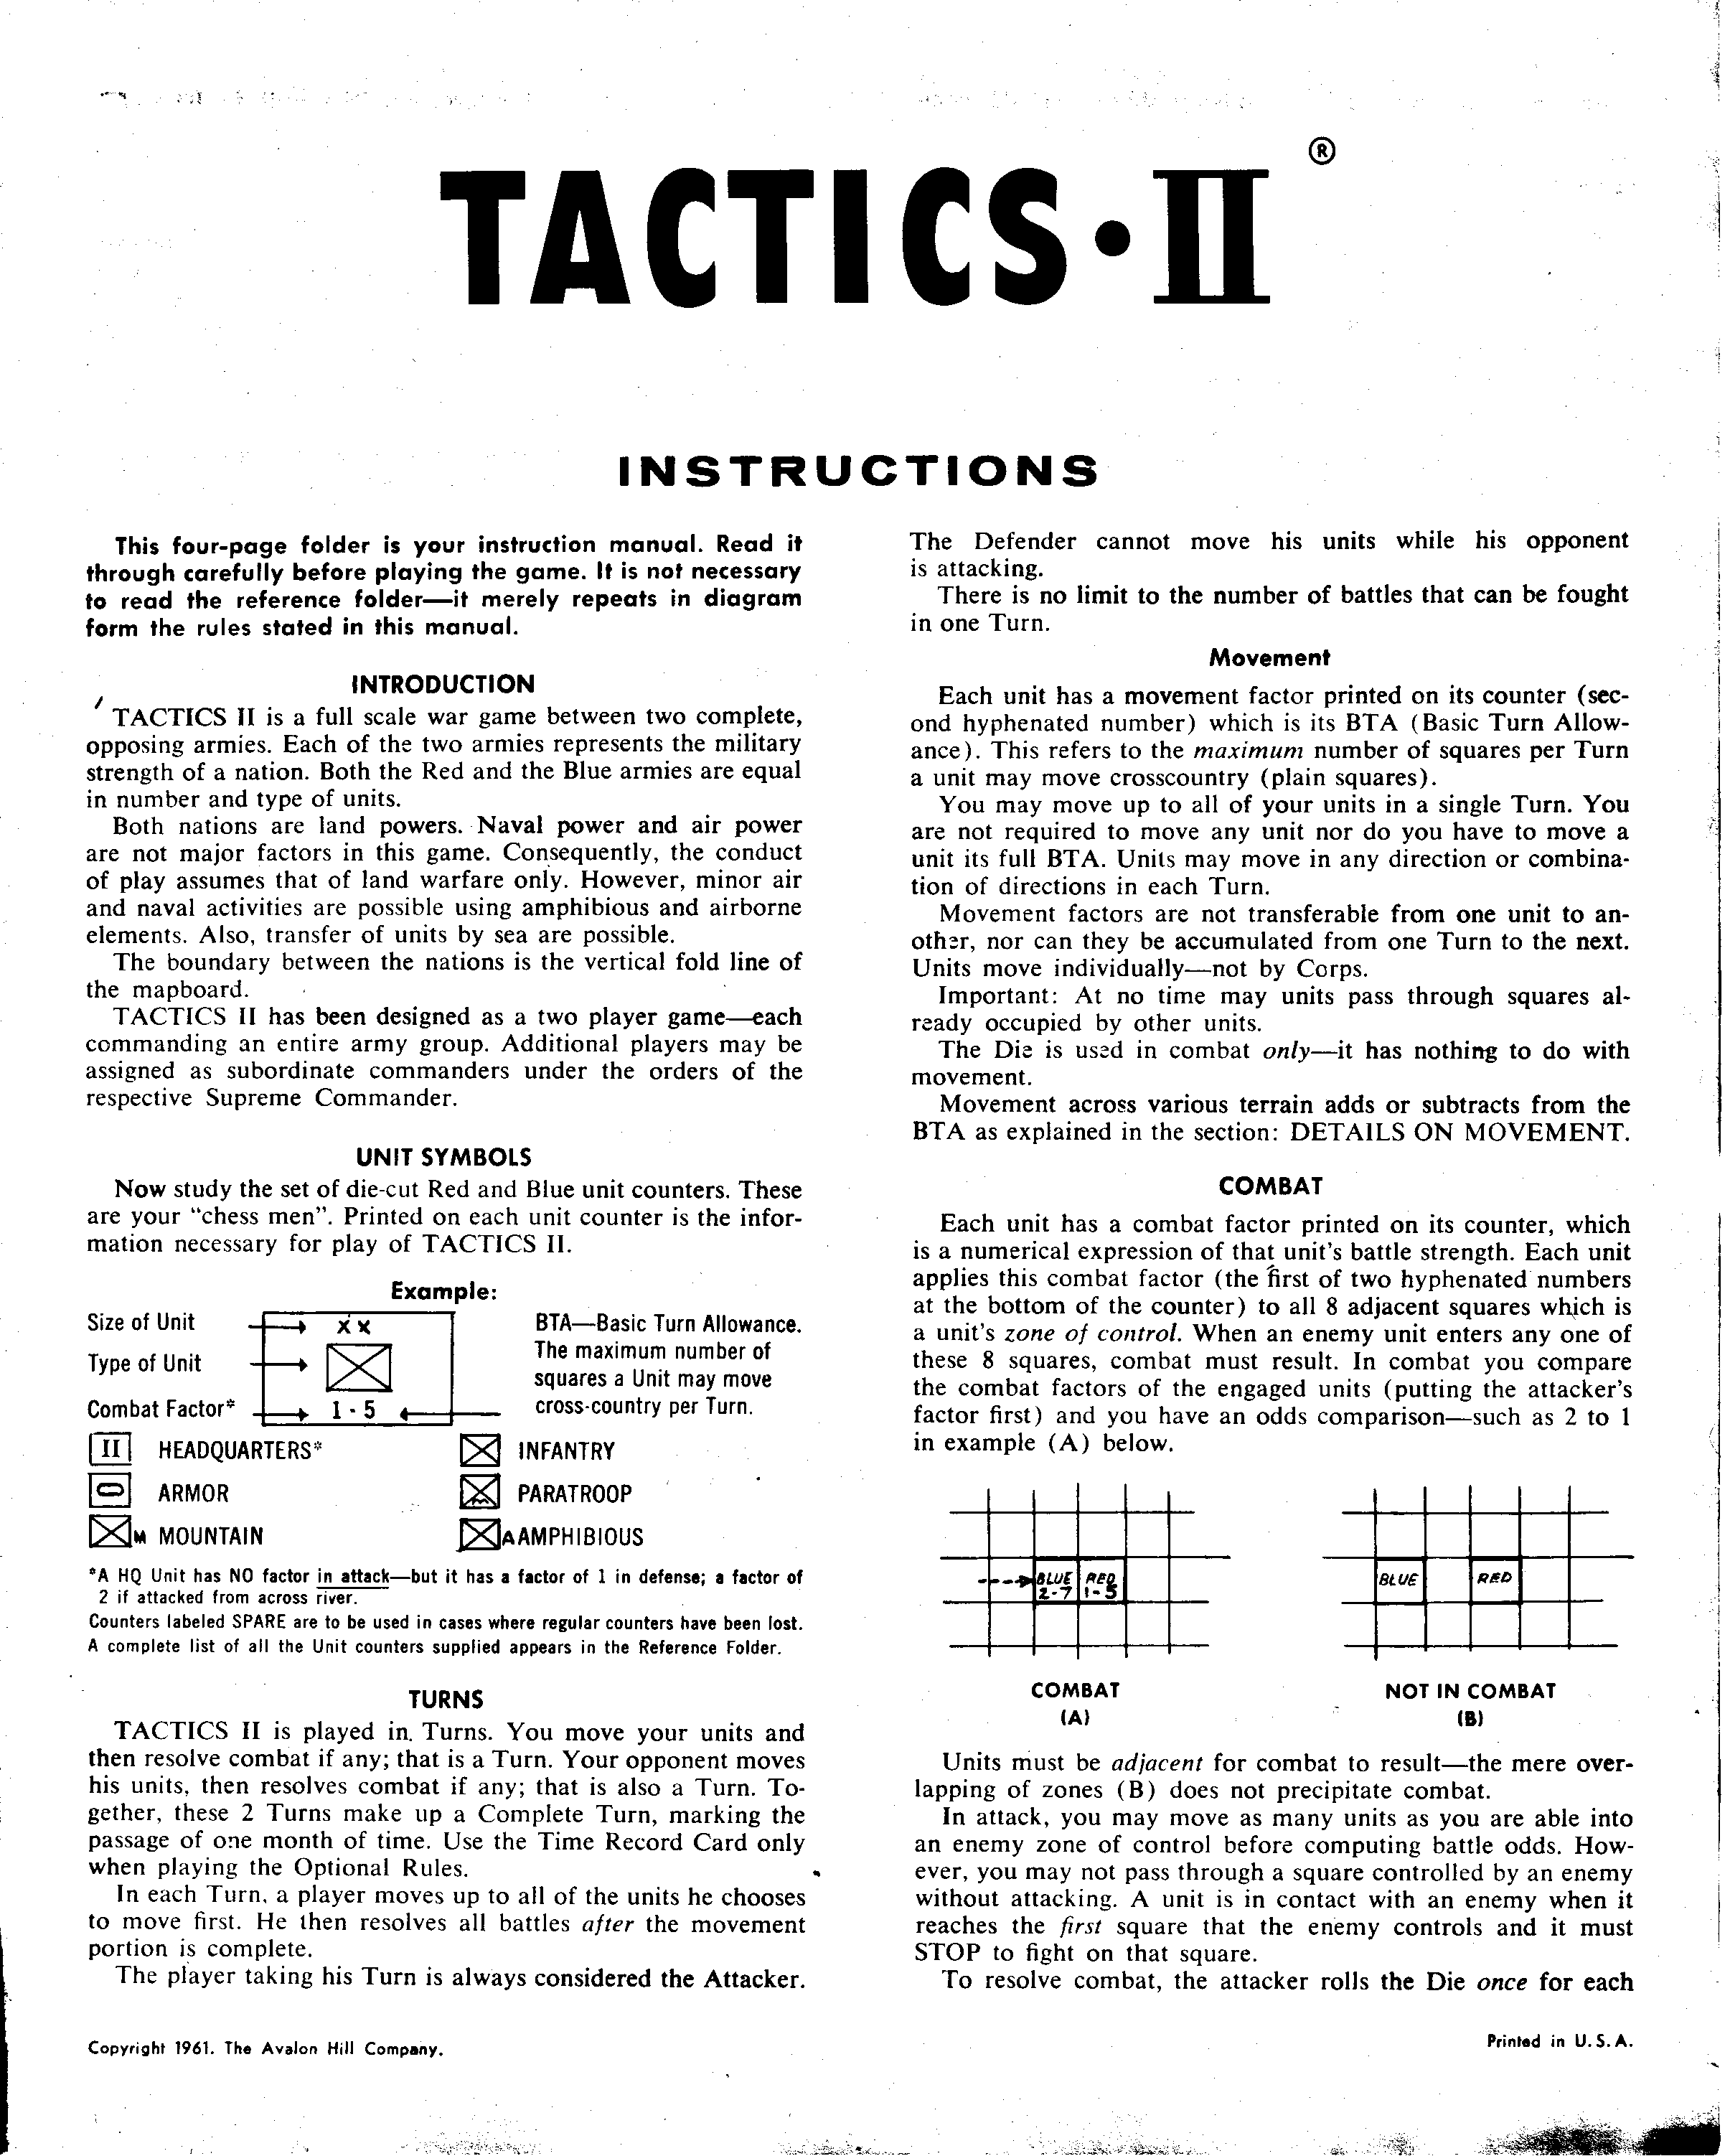 Tactics II的規則只有幾頁，並不複雜。可以看到算子採用了簡單的戰鬥值